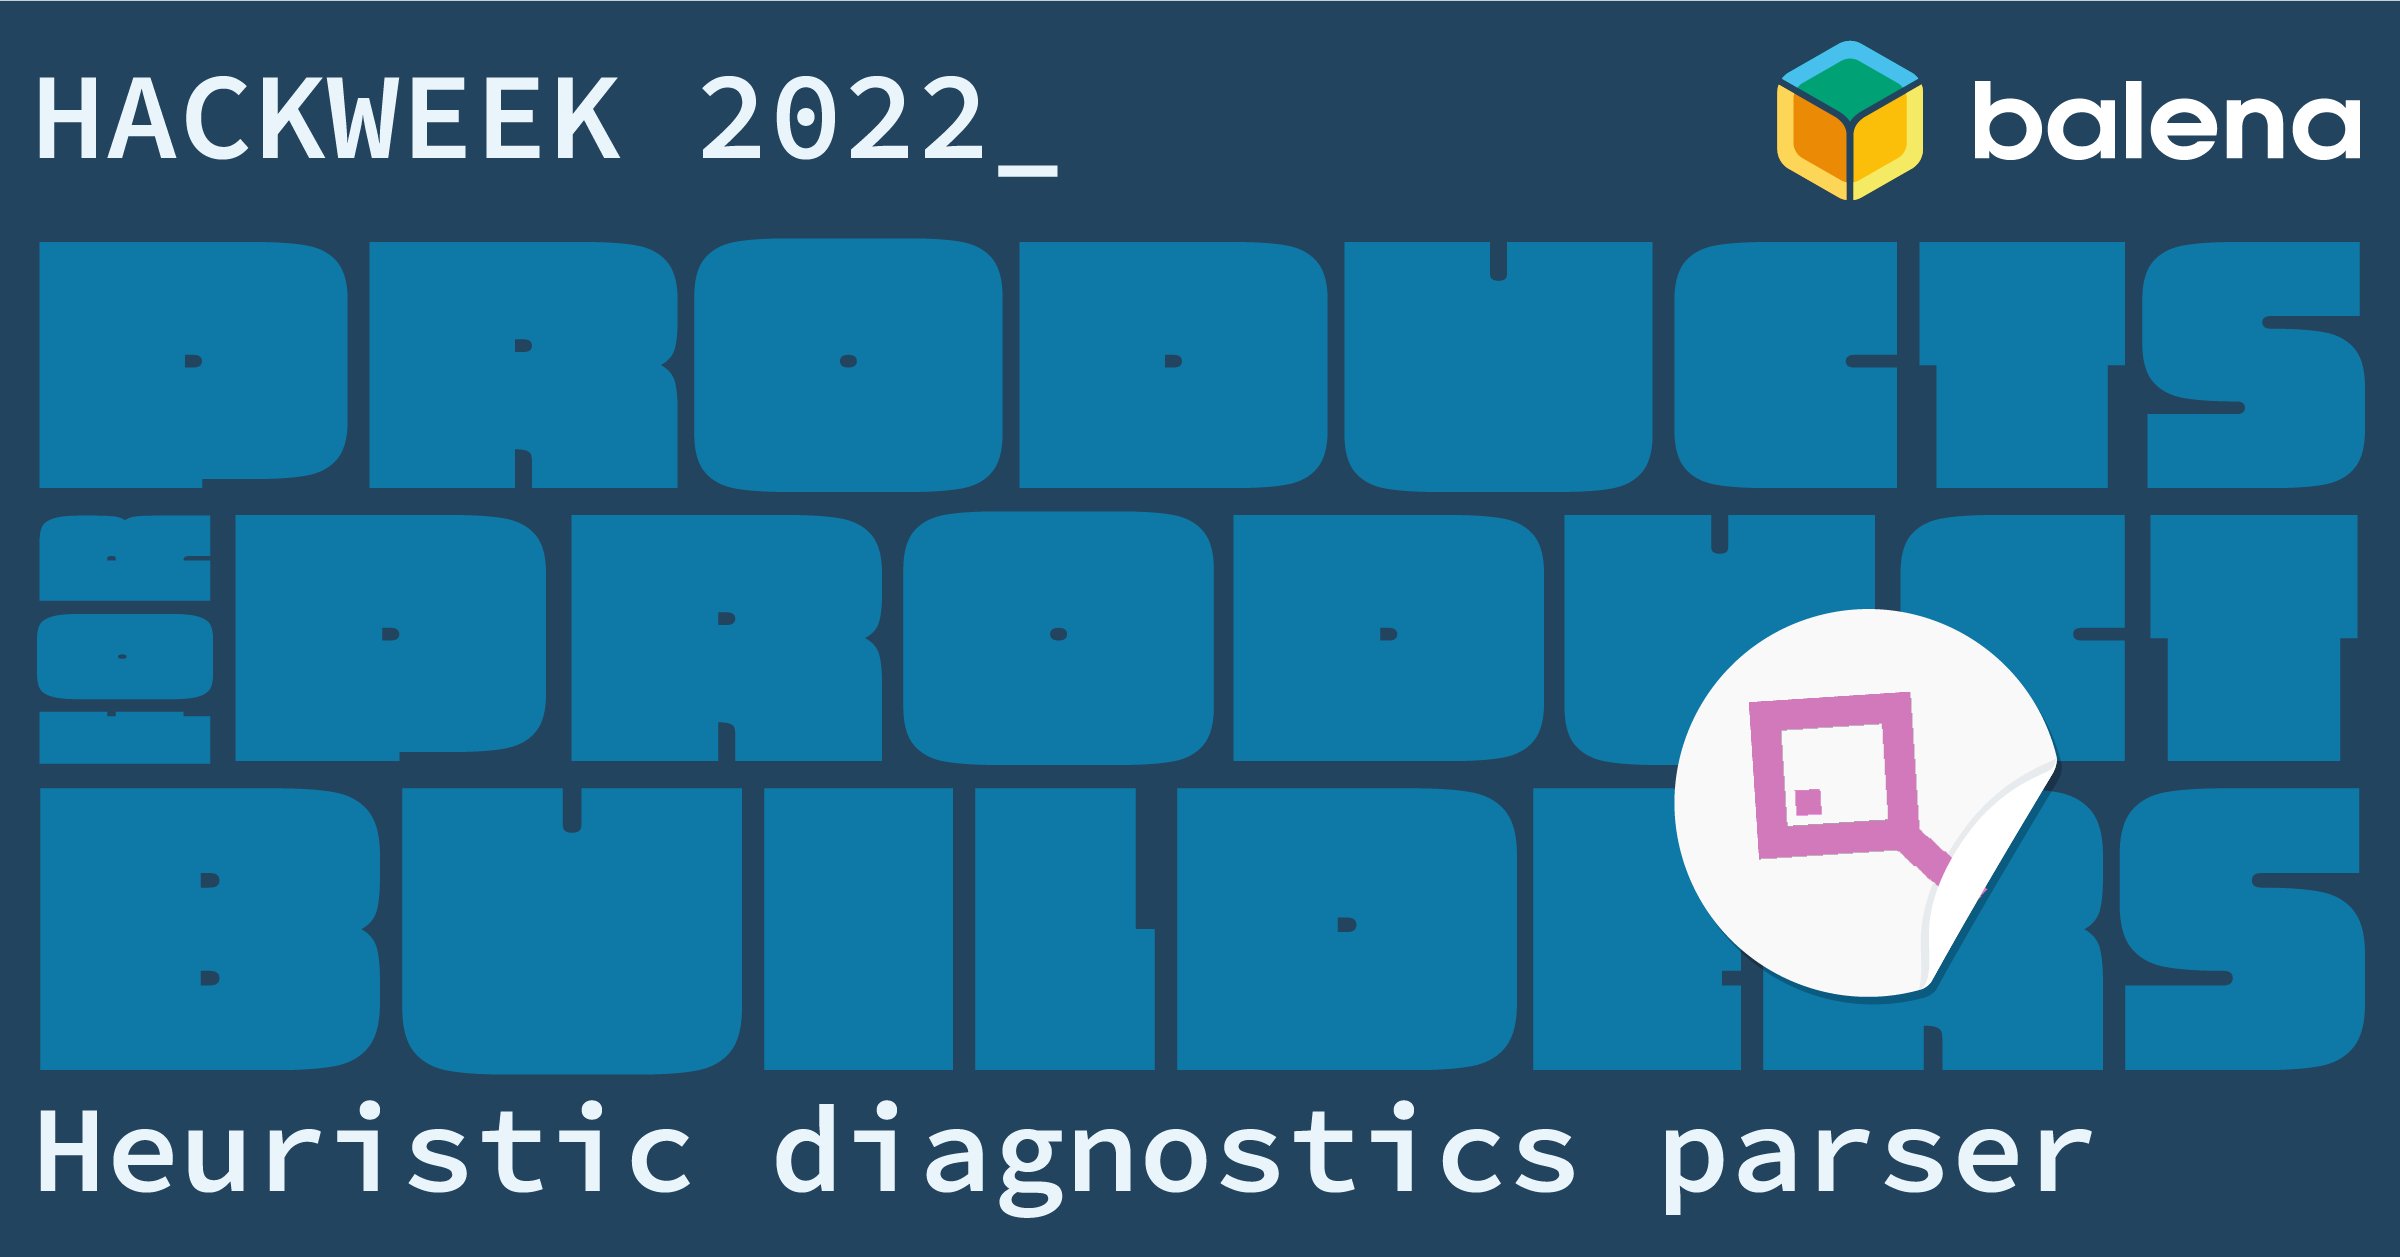 Hack Week 2022 reflection: heuristics diagnostics parser